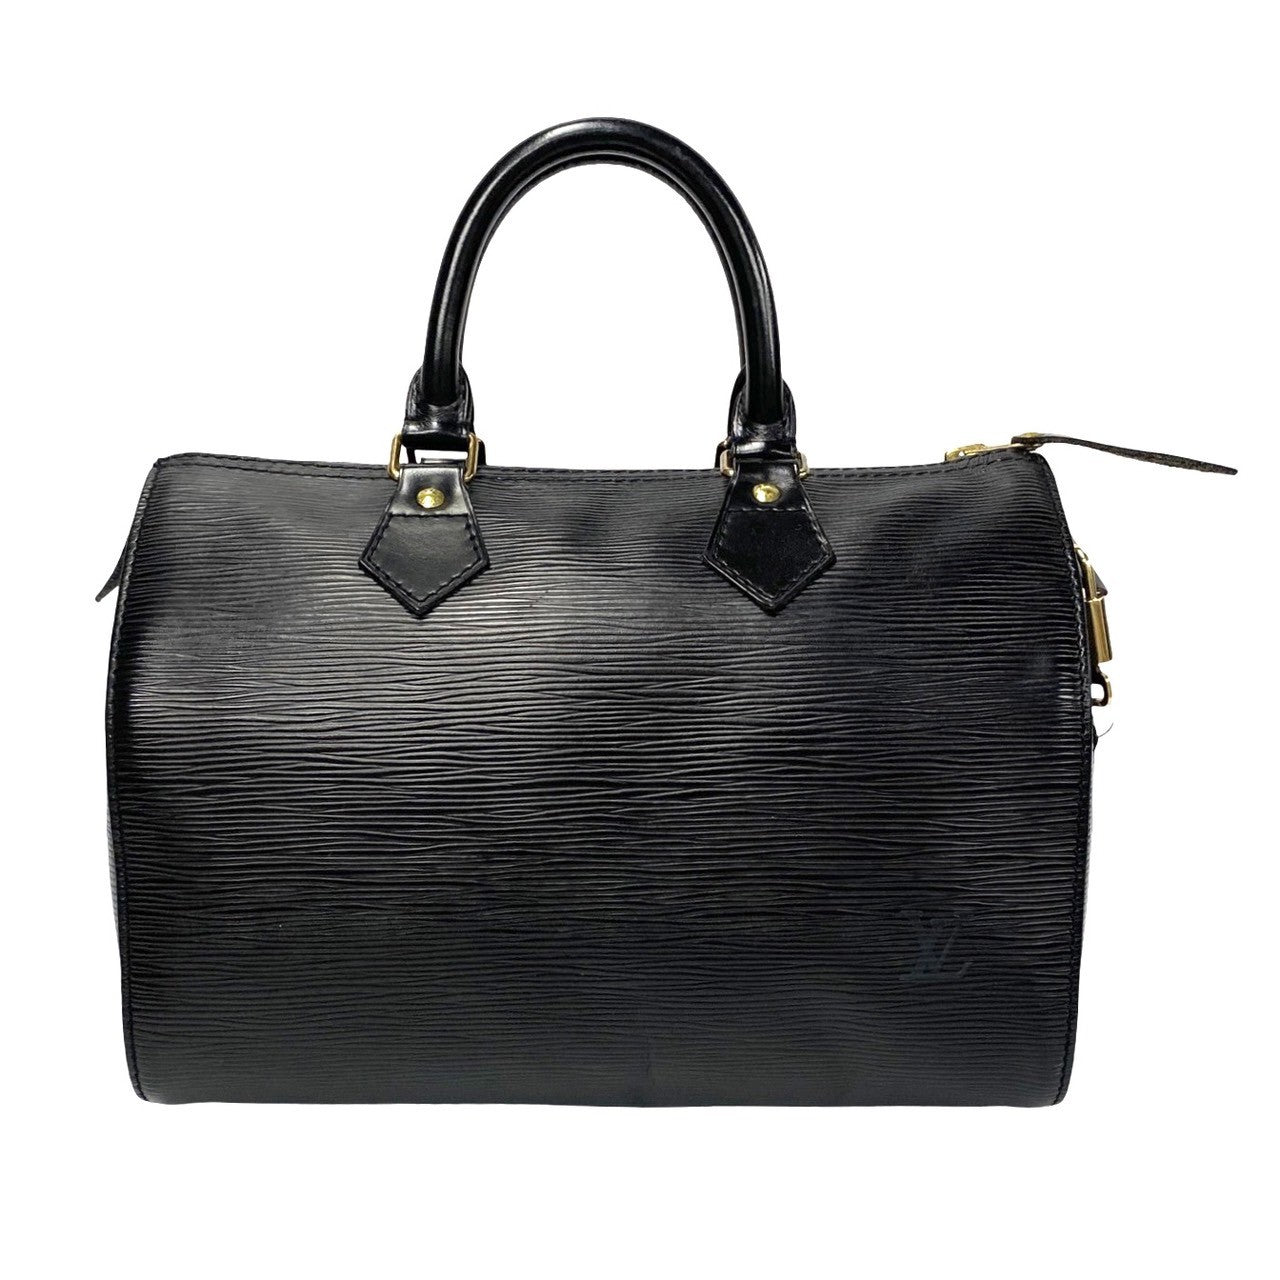 Louis Vuitton Speedy 25 Leather Handbag M43012 in Excellent condition